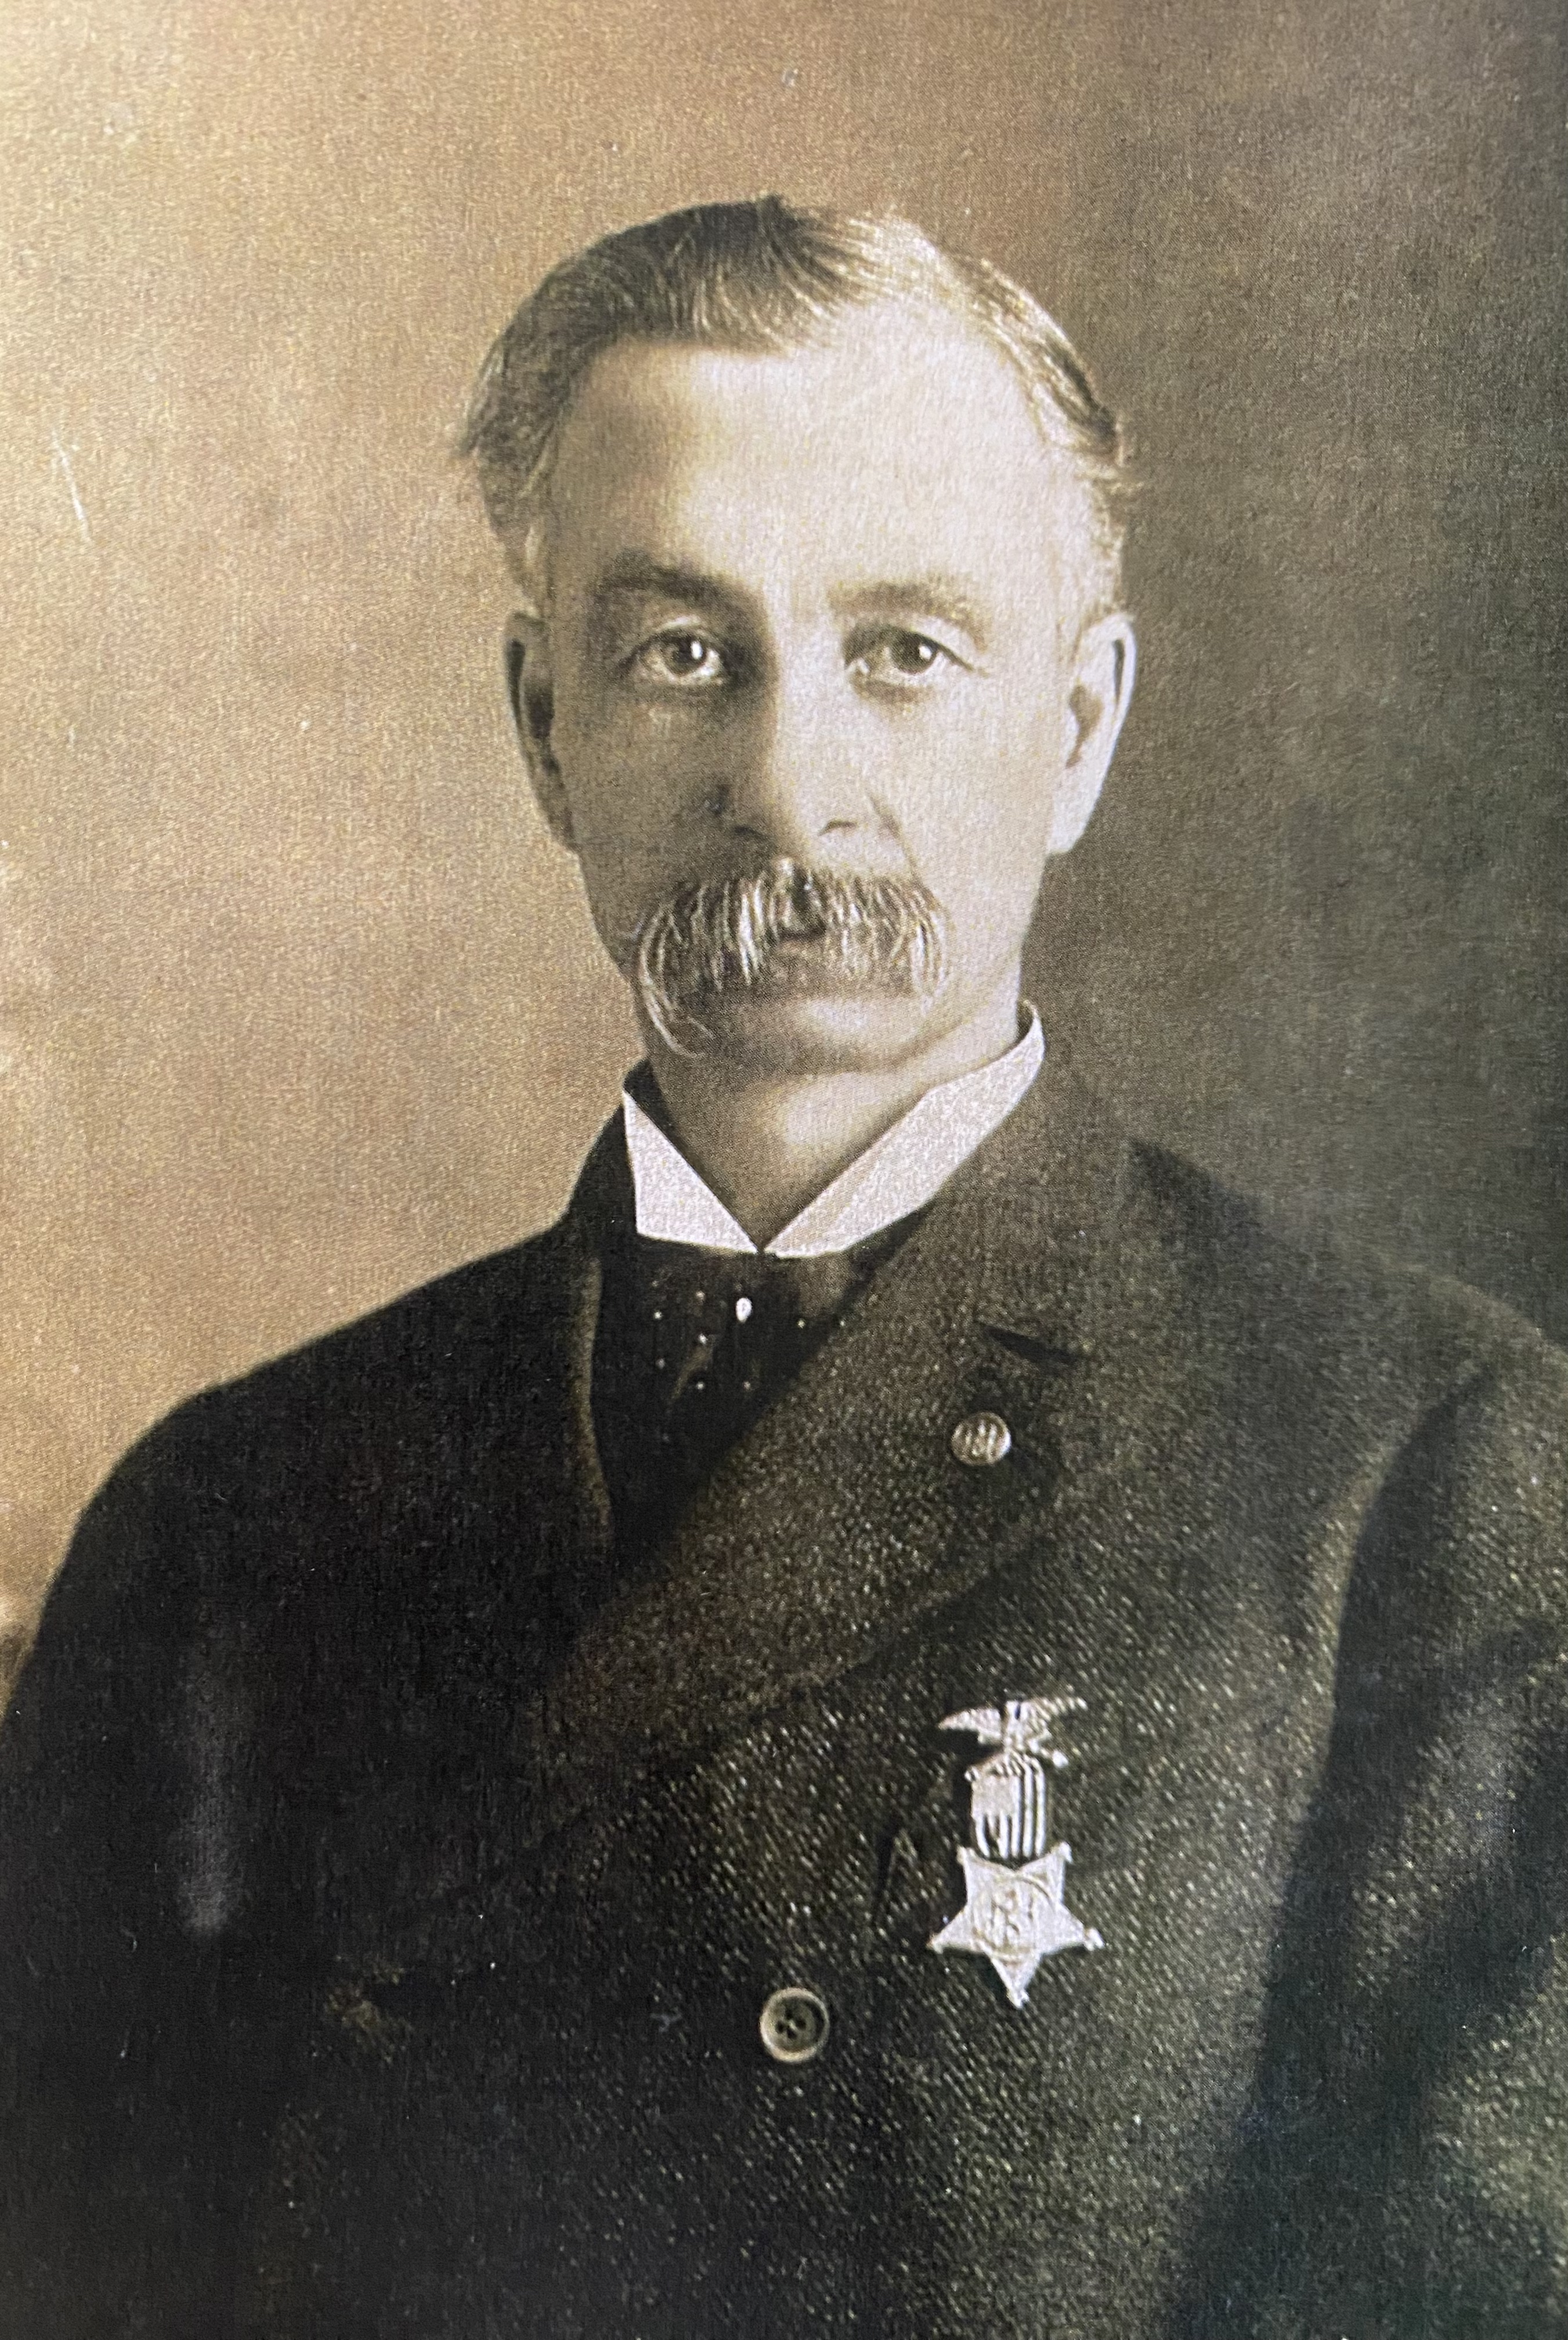 Headshot of John R. Hamilton wearing medal